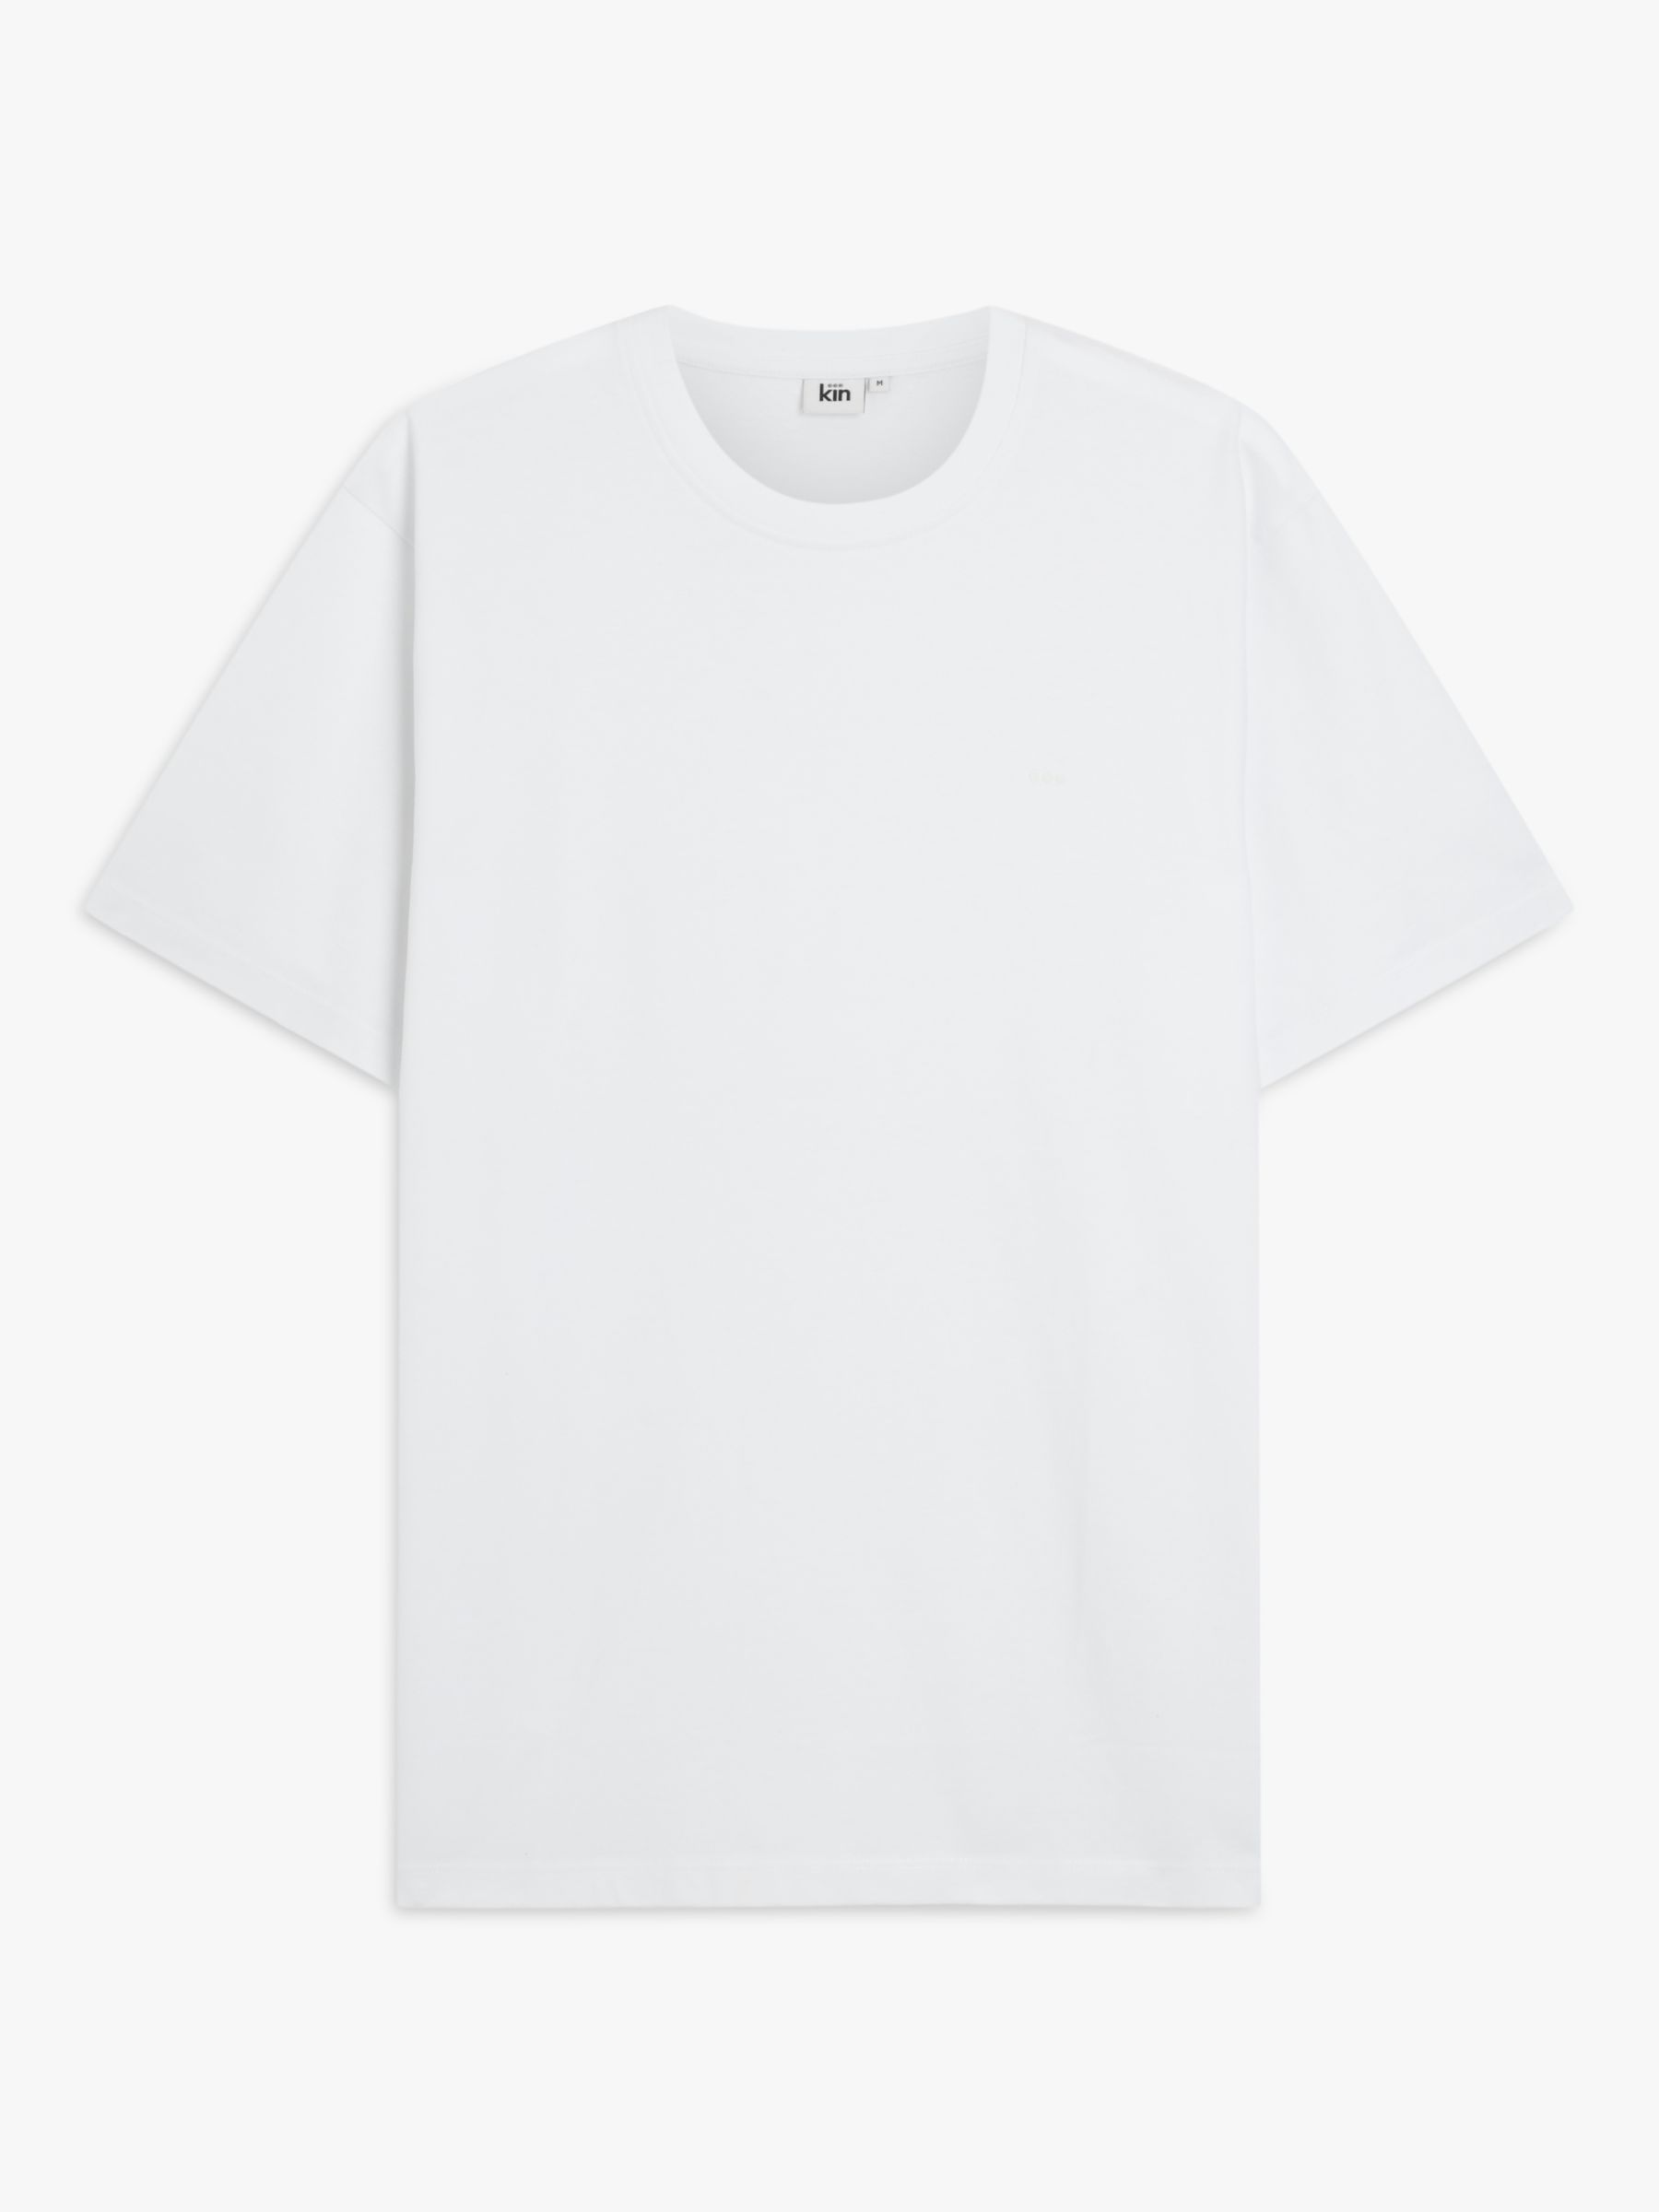 Kin Logo Cotton T-Shirt, Bright White, S